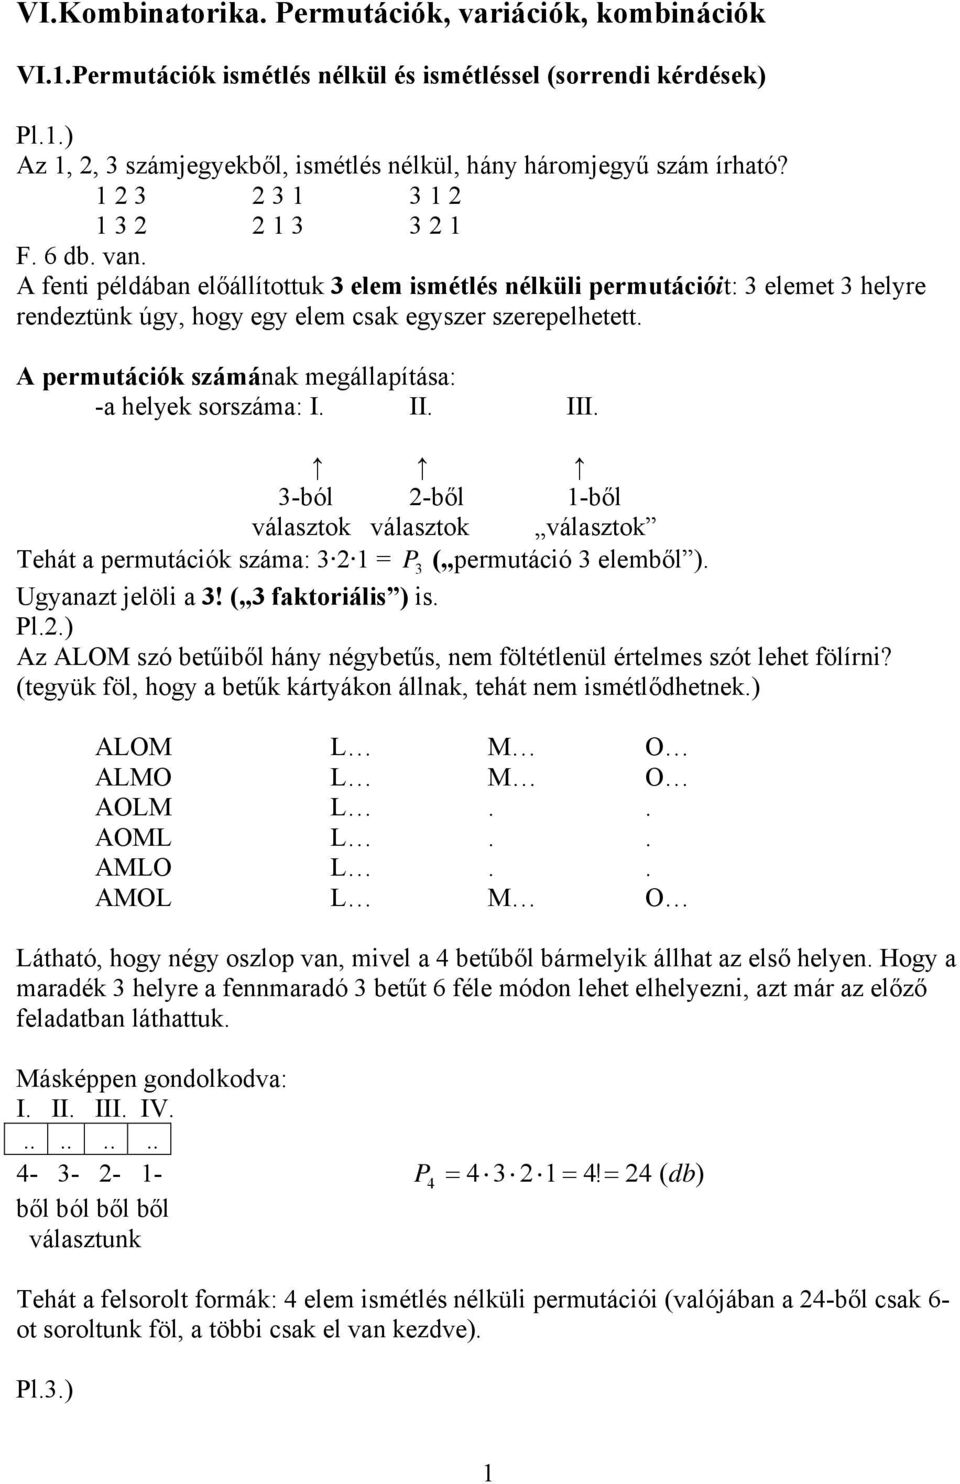 VI.Kombinatorika. Permutációk, variációk, kombinációk - PDF Free Download